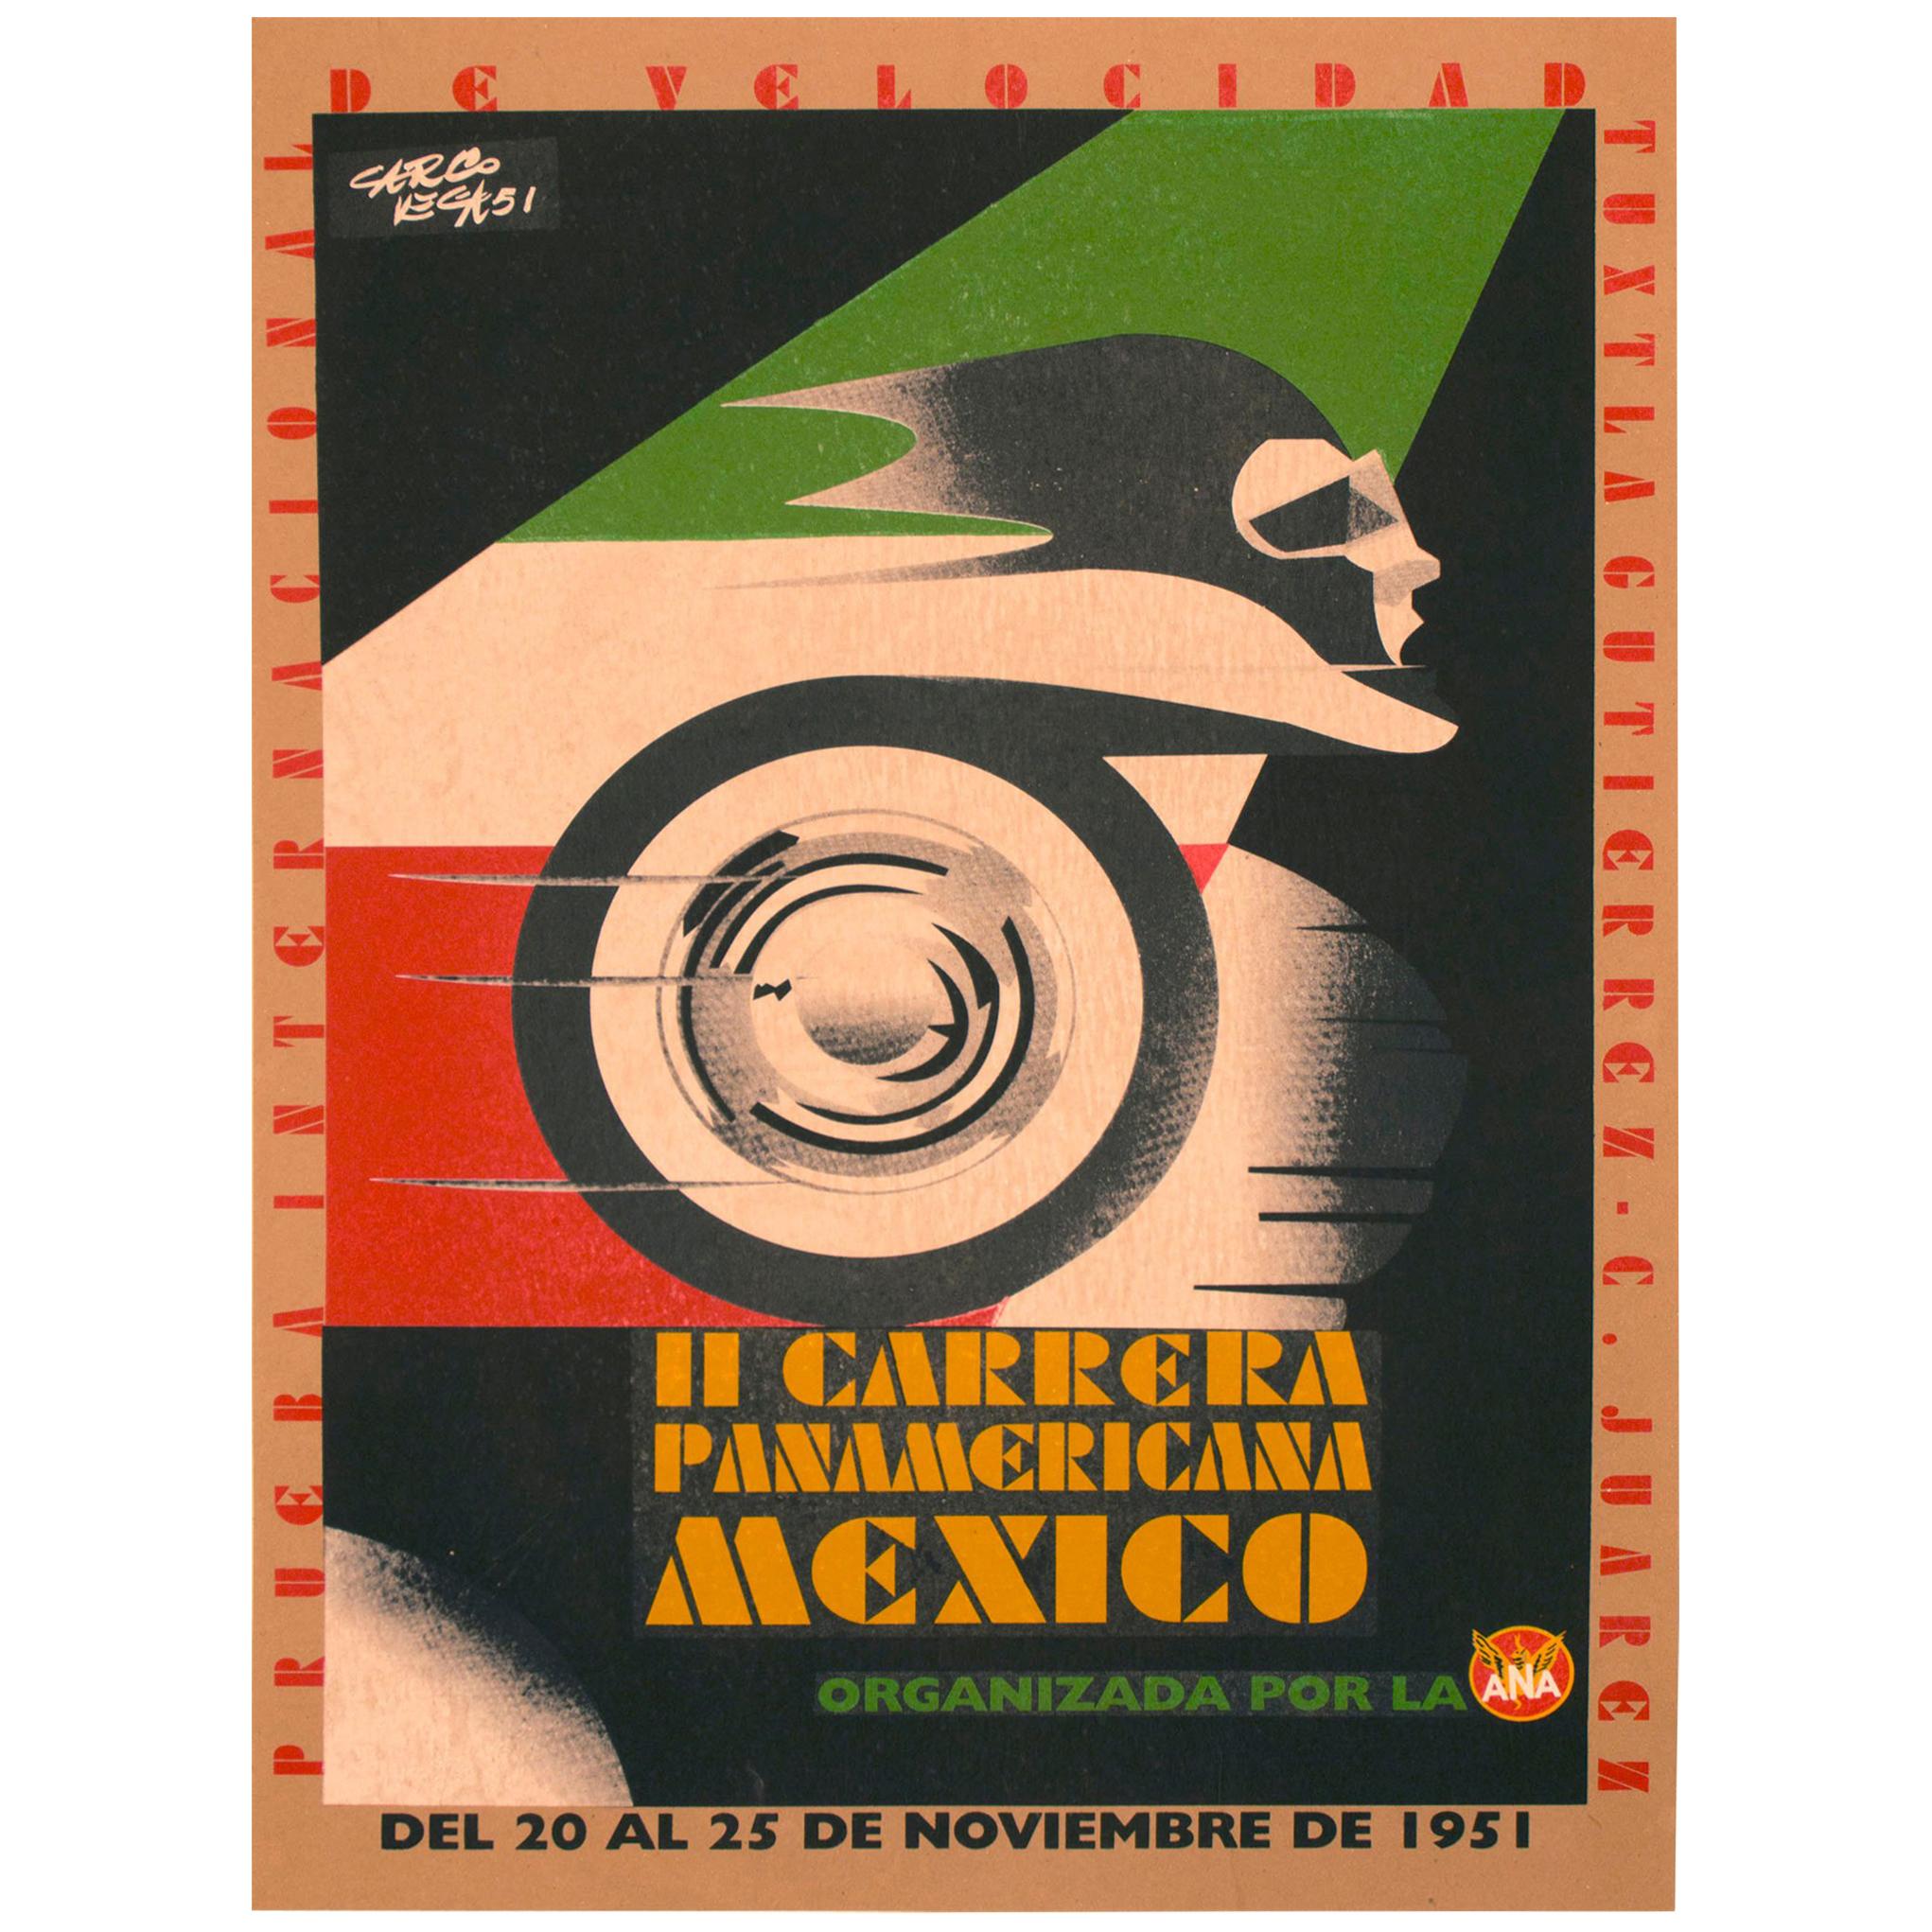 Original Vintage Racing Poster for Carrera Panamericana Mexico